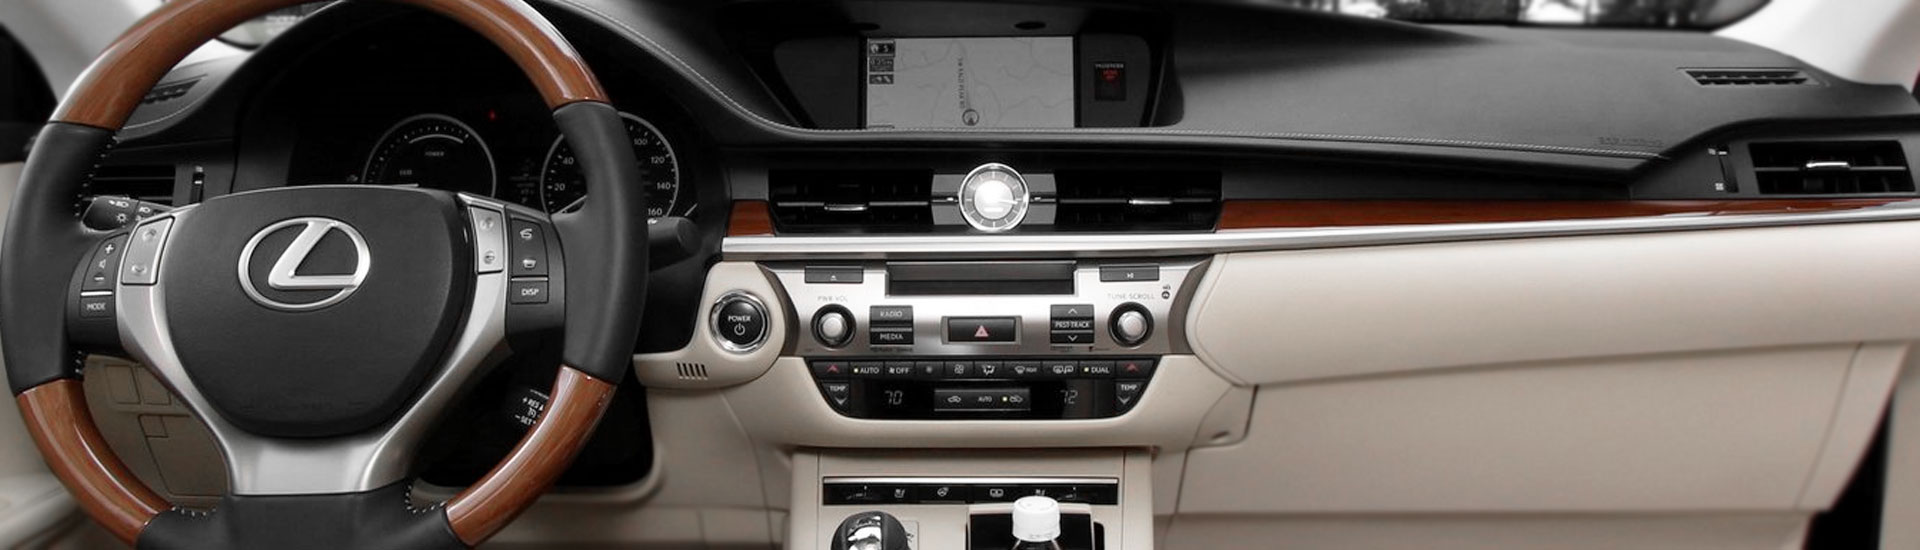 2012 Lexus LX Custom Dash Kits